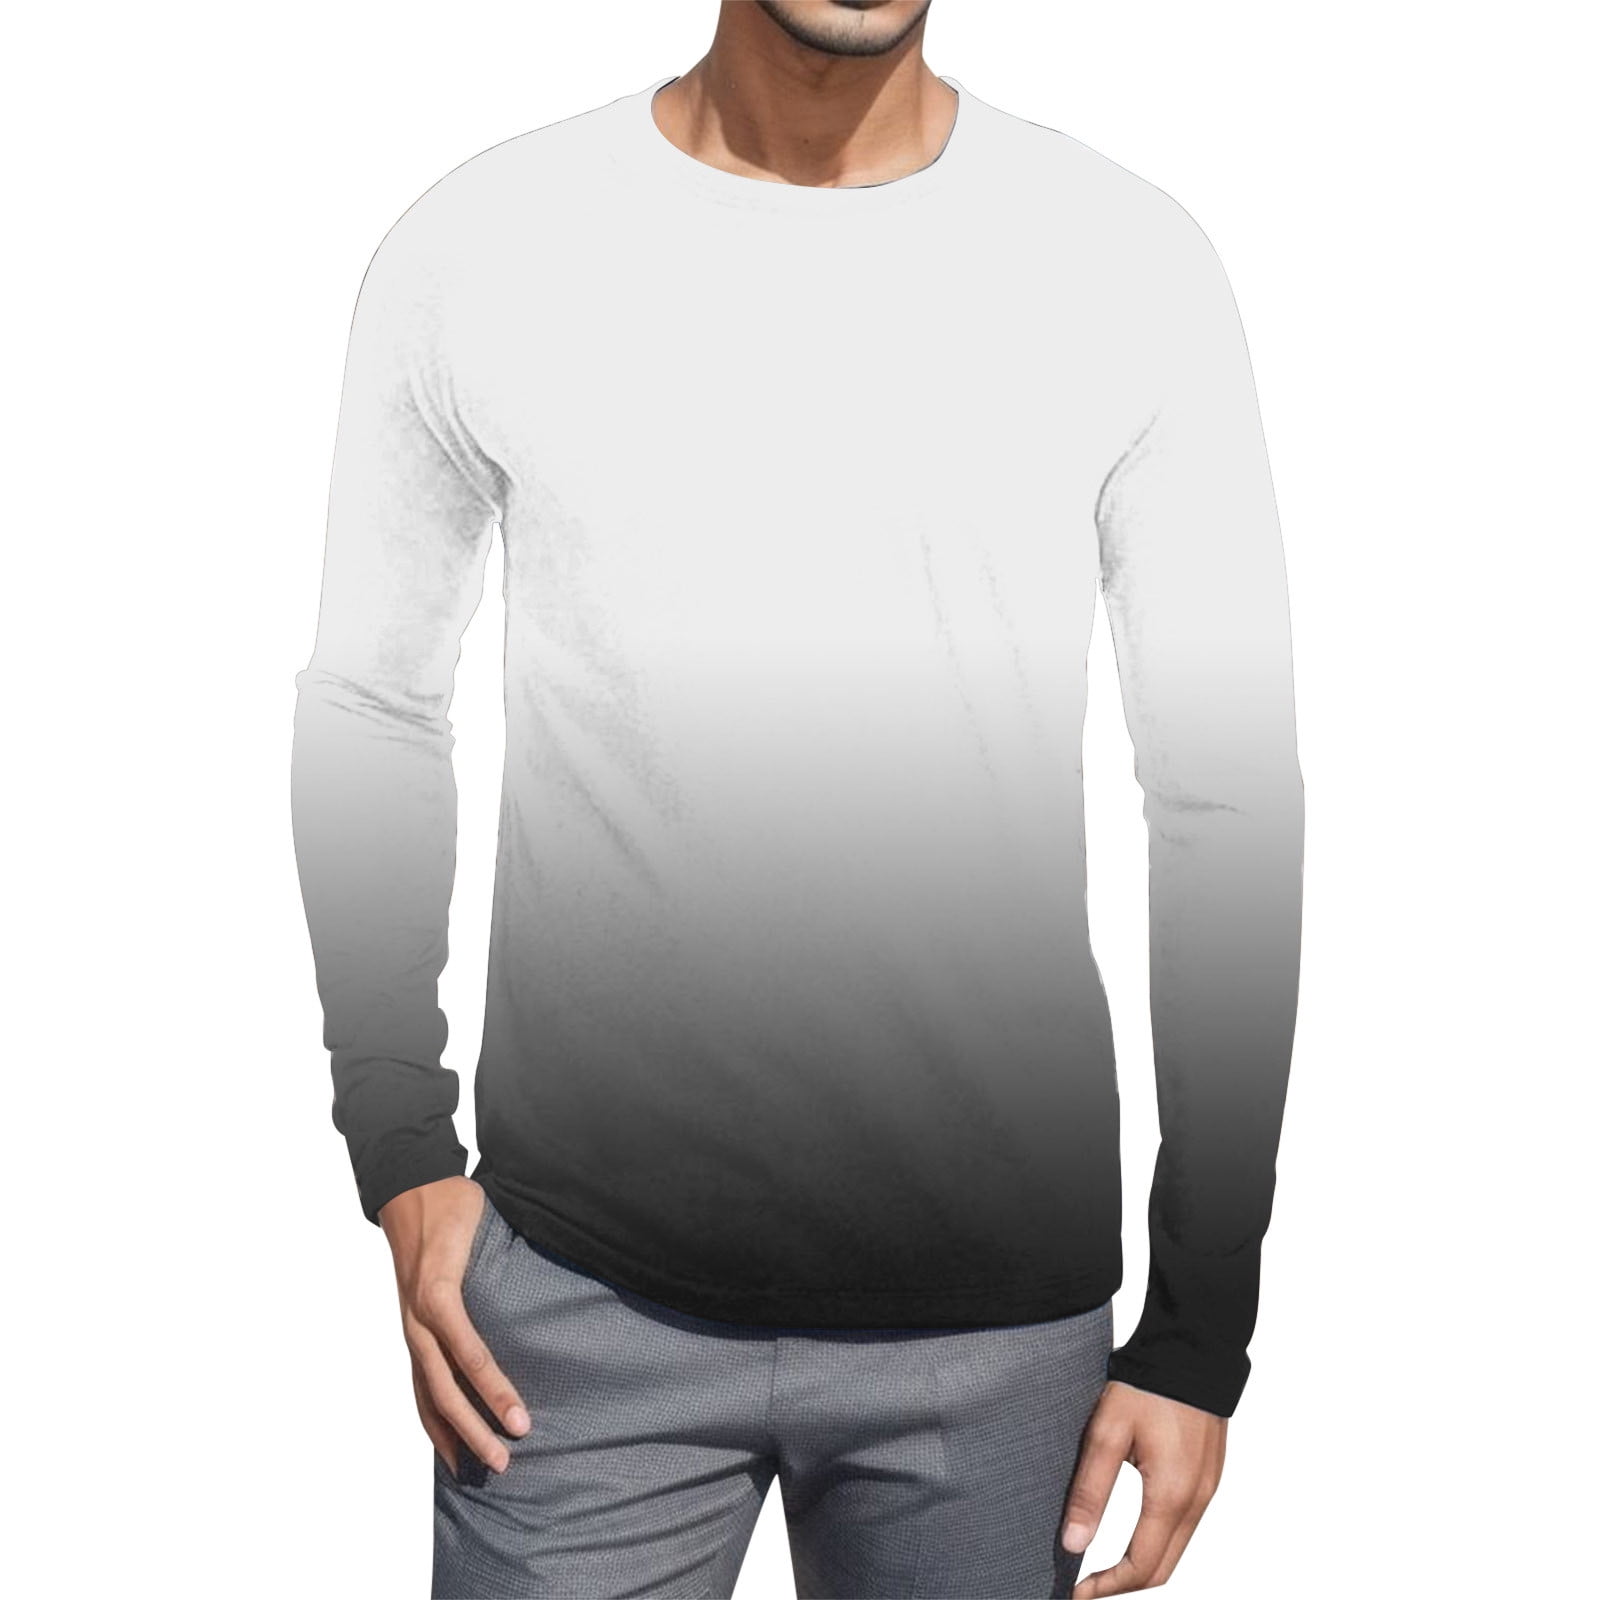 KaLI_store Mens Shirts Men's Performance Tech Long-Sleeve T-Shirt White,3XL  